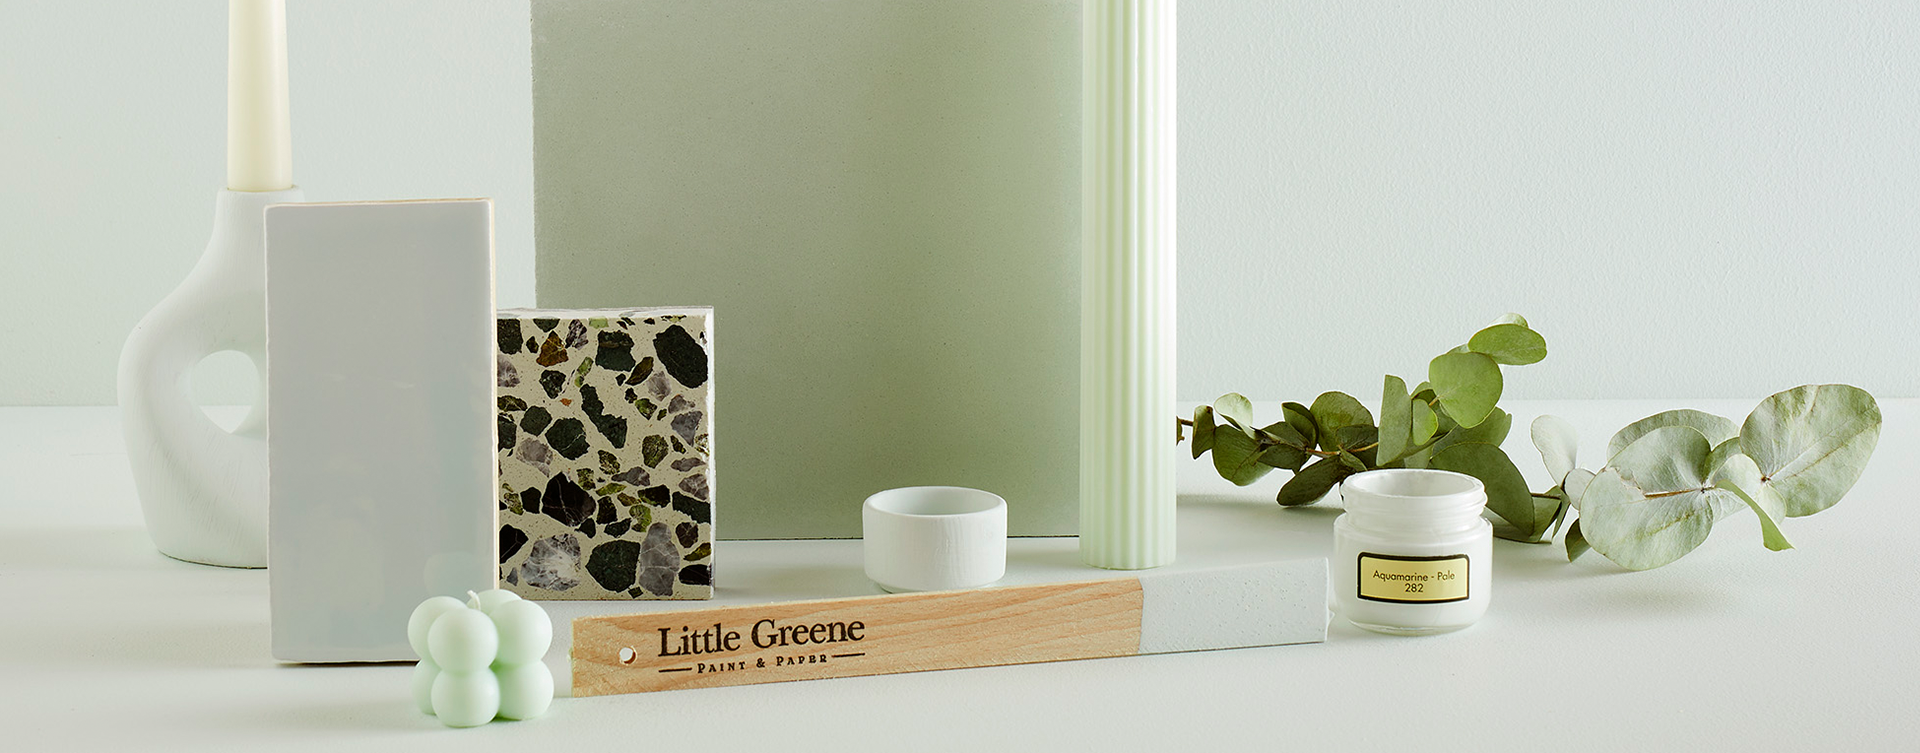 Little Greene Green Tones - Mood Board - Samples - John Willox Kitchen Design is a supplier of Little Greene Paint and Wallpaper.